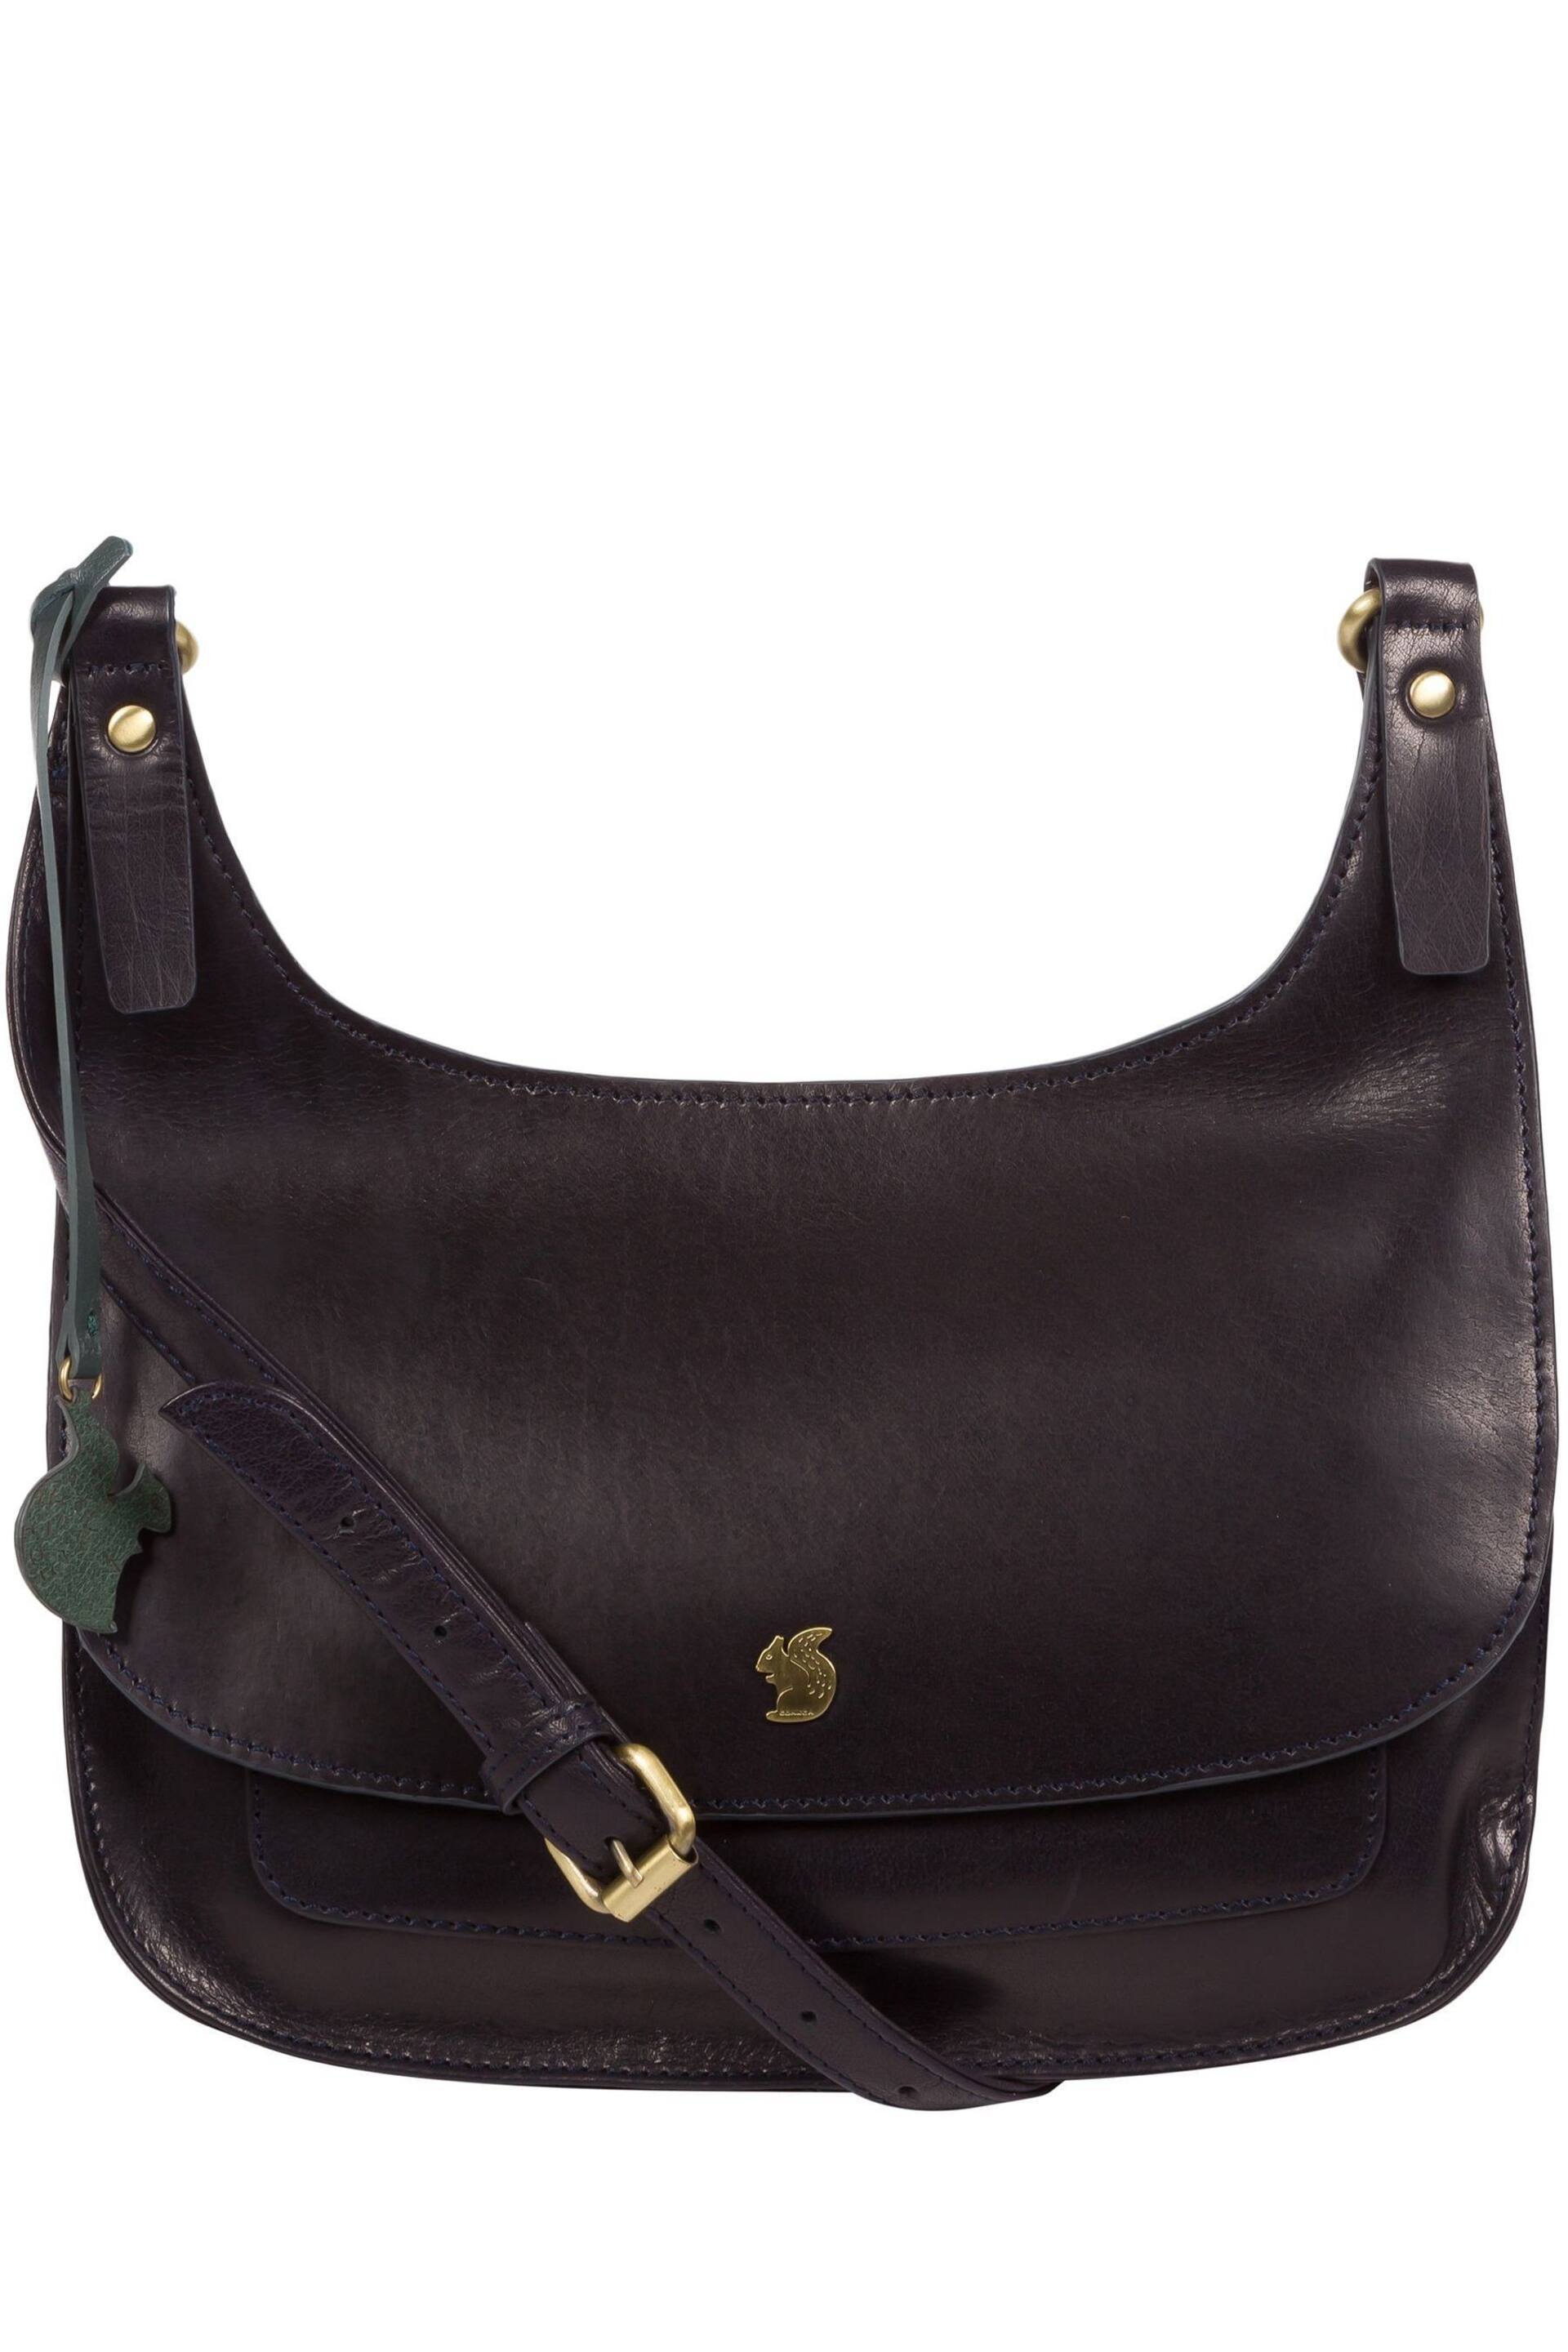 Conkca Ellipse Leather Cross-Body Bag - Image 2 of 6